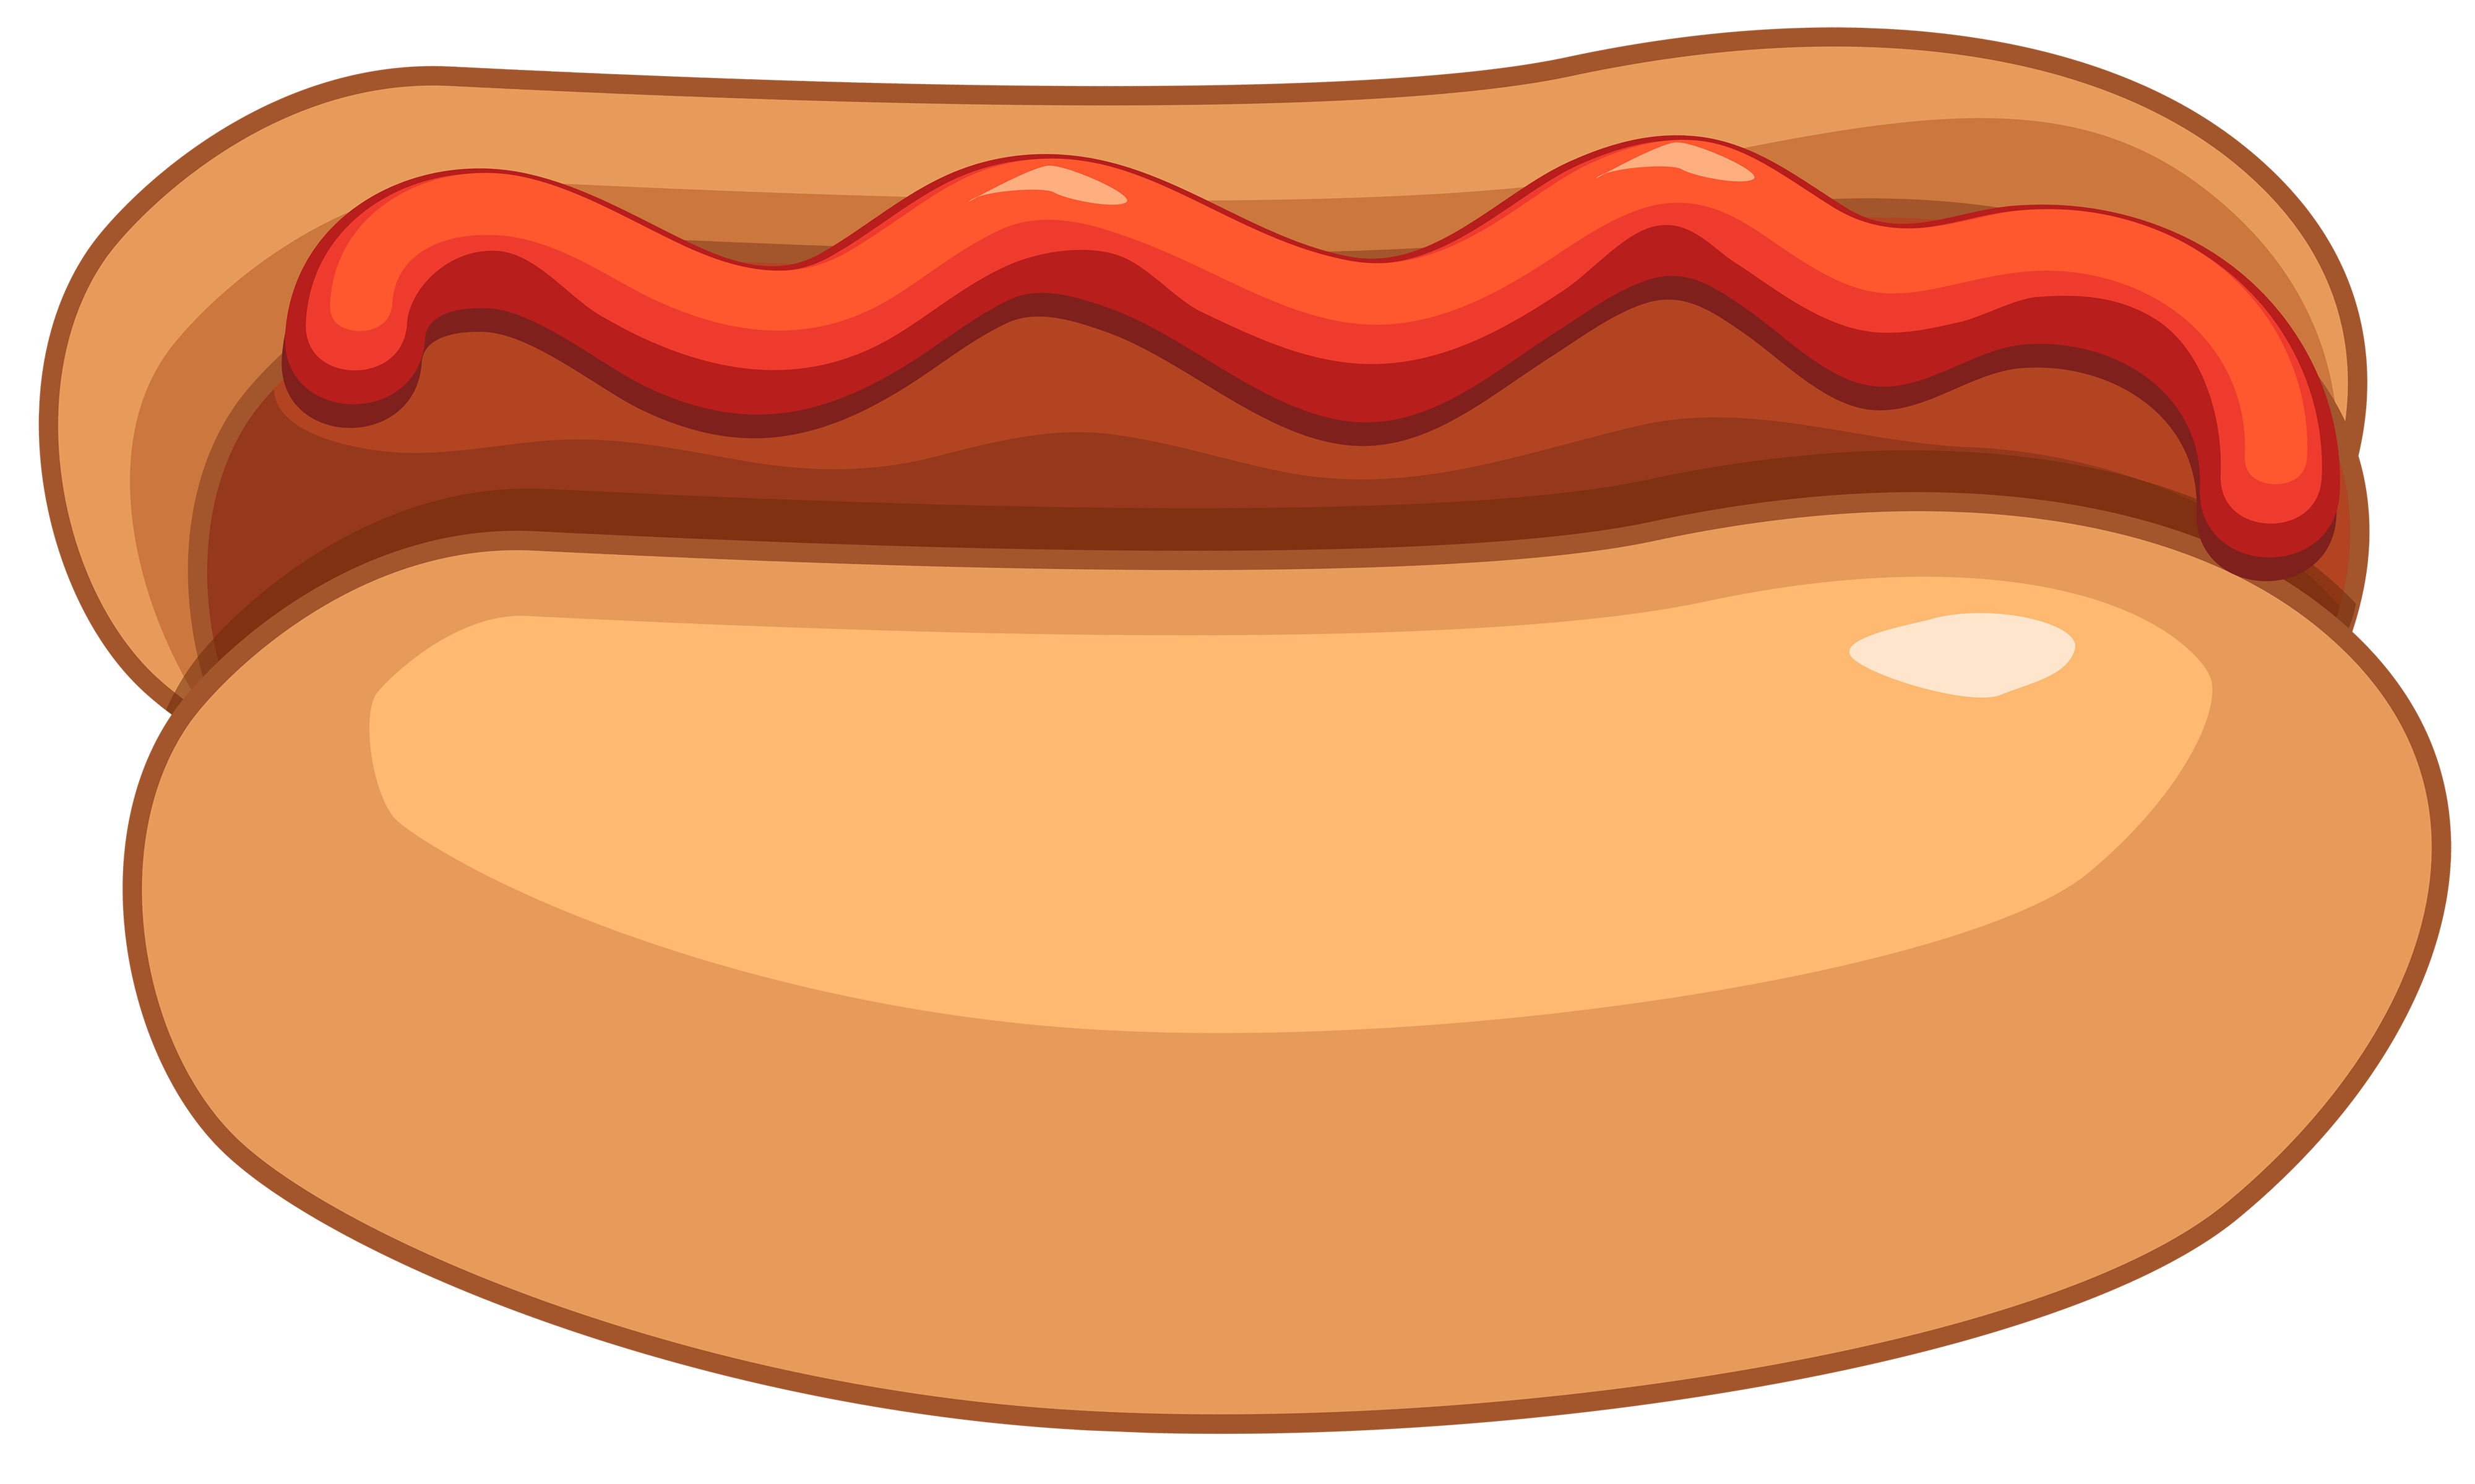 Hot dog and ketchup. Moth clipart animated